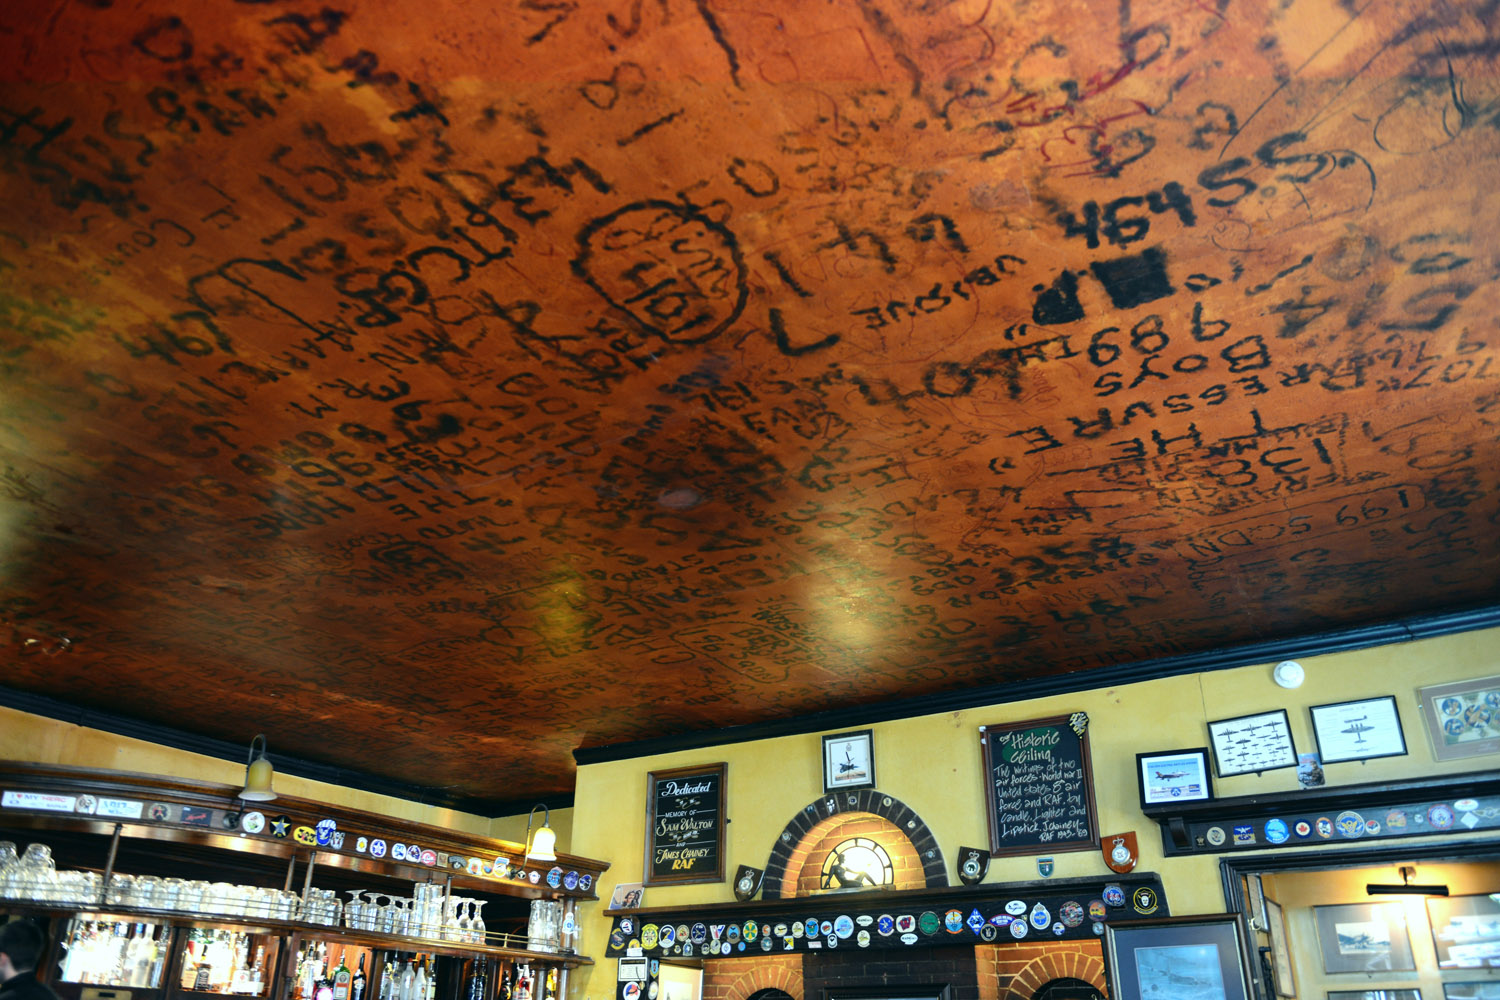 Graffiti on ceiling of pub